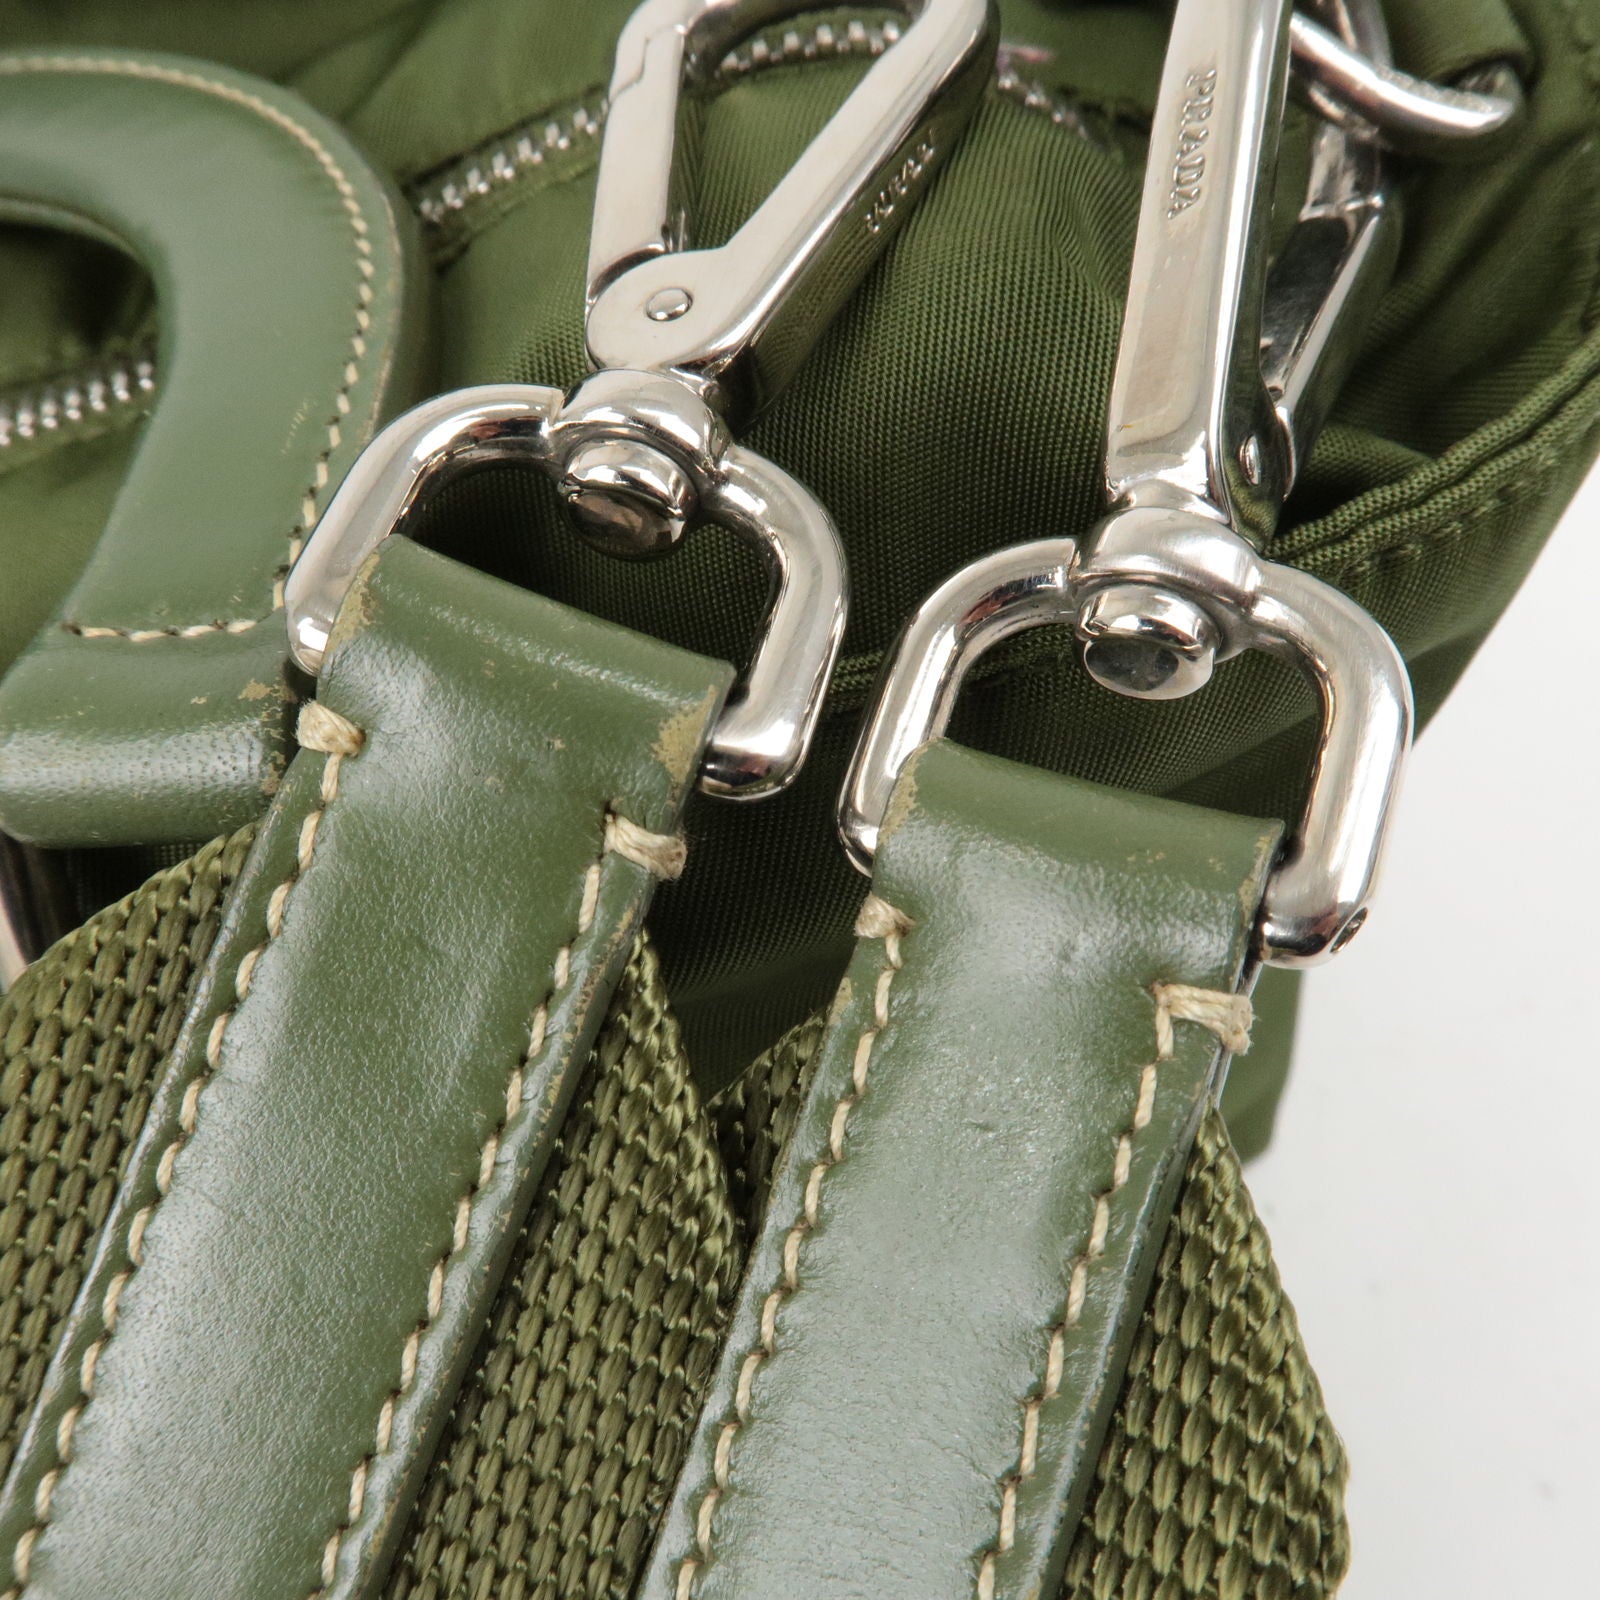 PRADA-Nylon-Leather-2Way-Bag-Hand-Bag-Green-BN1052